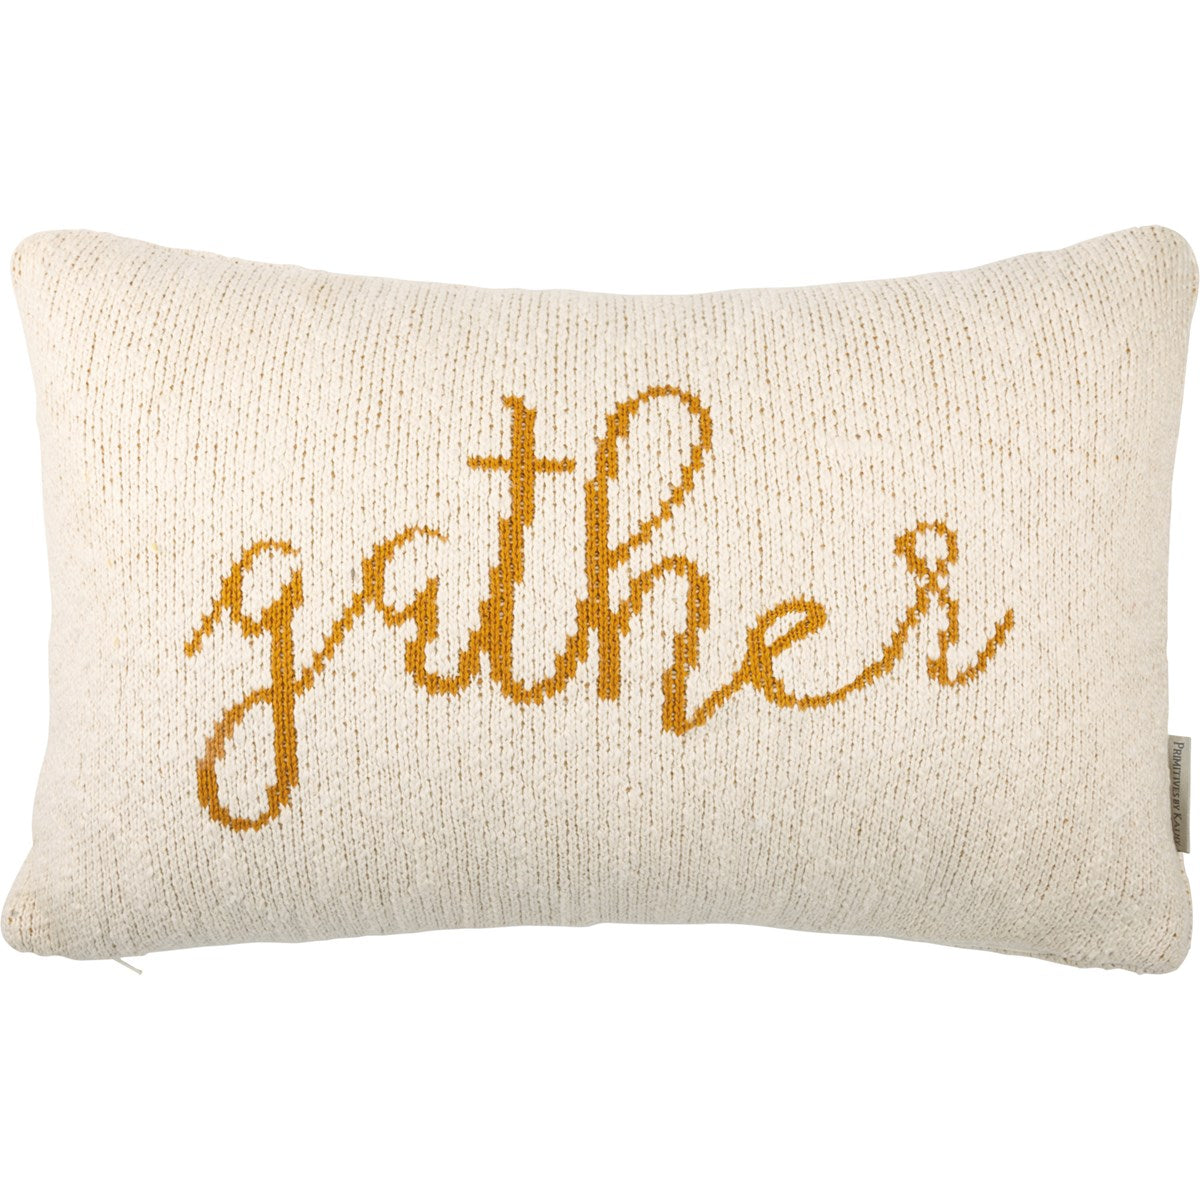 Gather Pillow